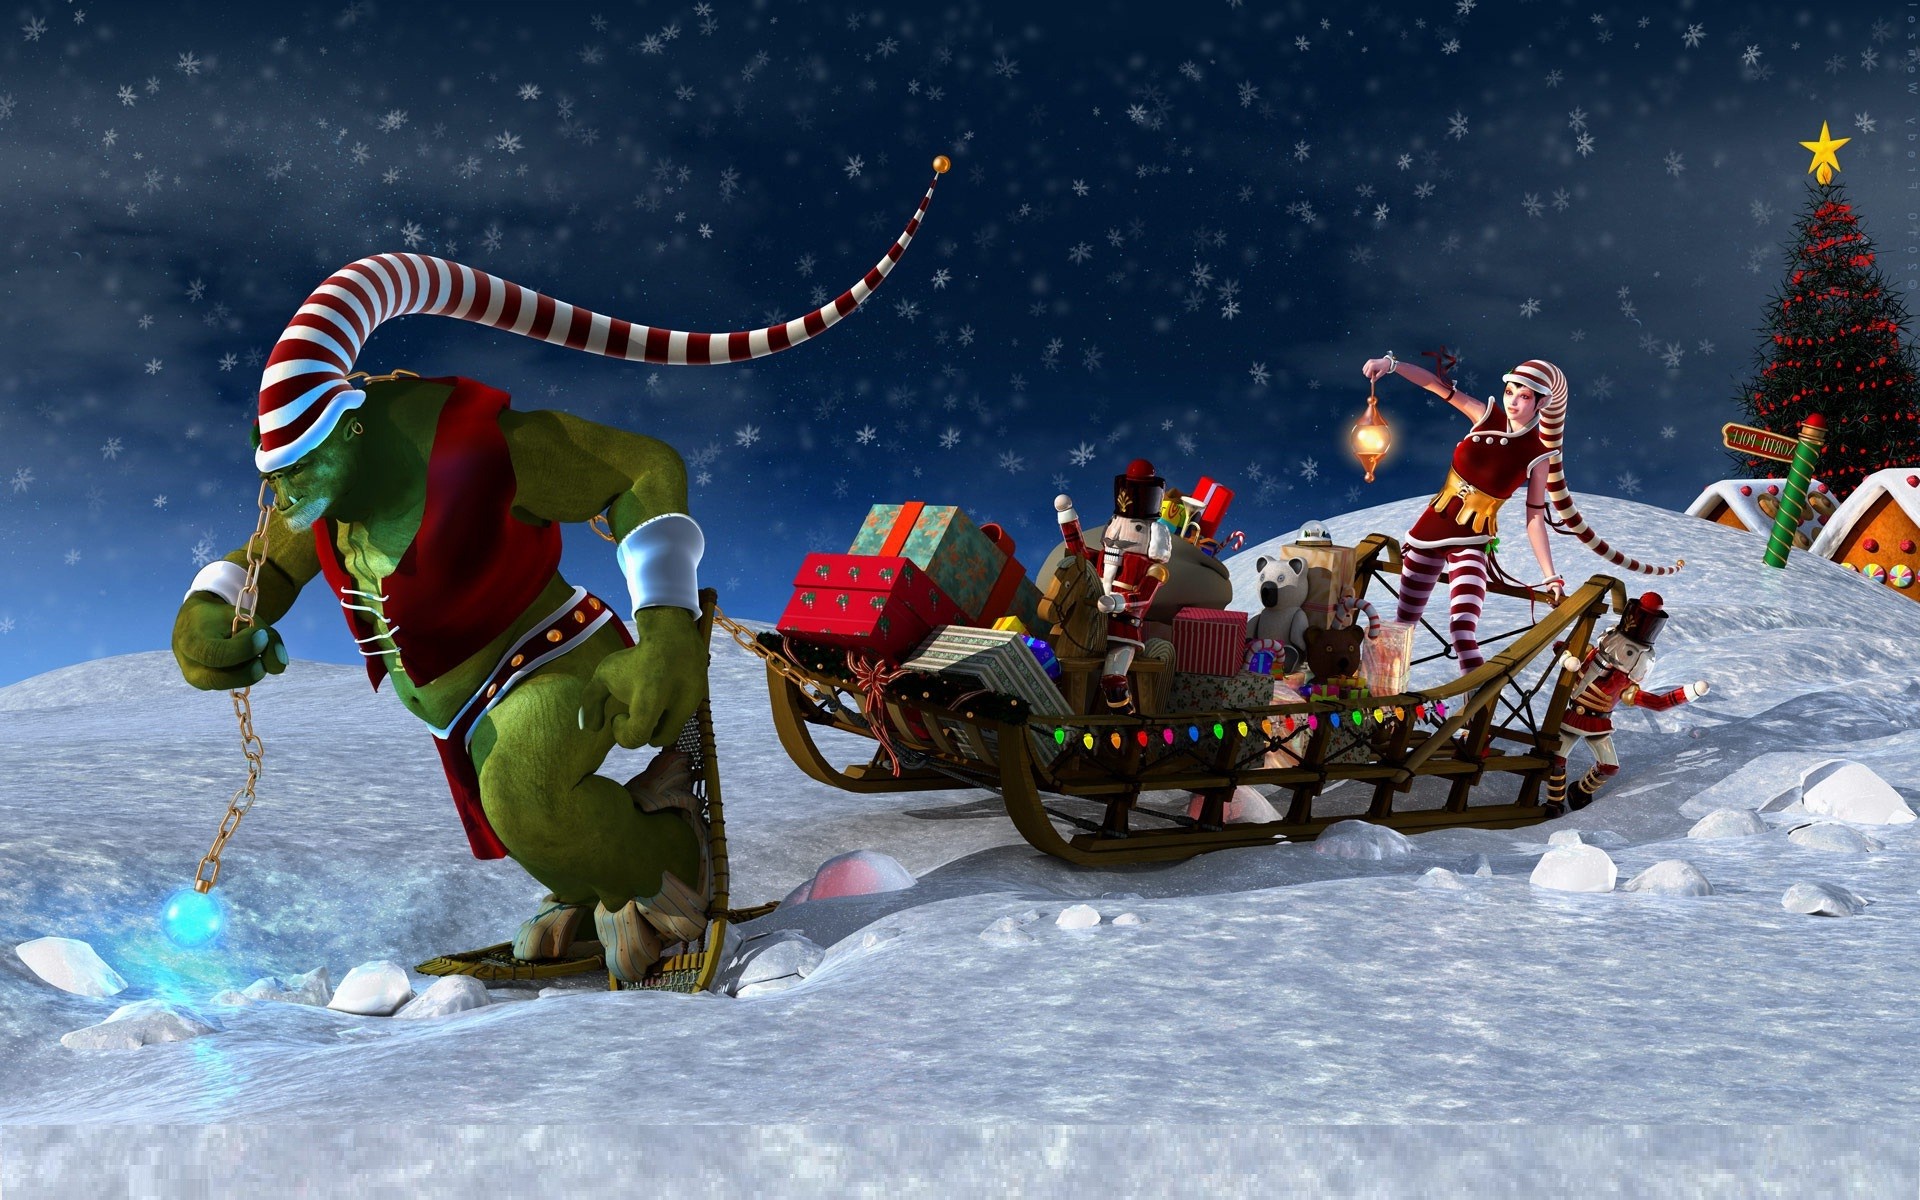 Animated Christmas Backgrounds For Desktop For Desktop